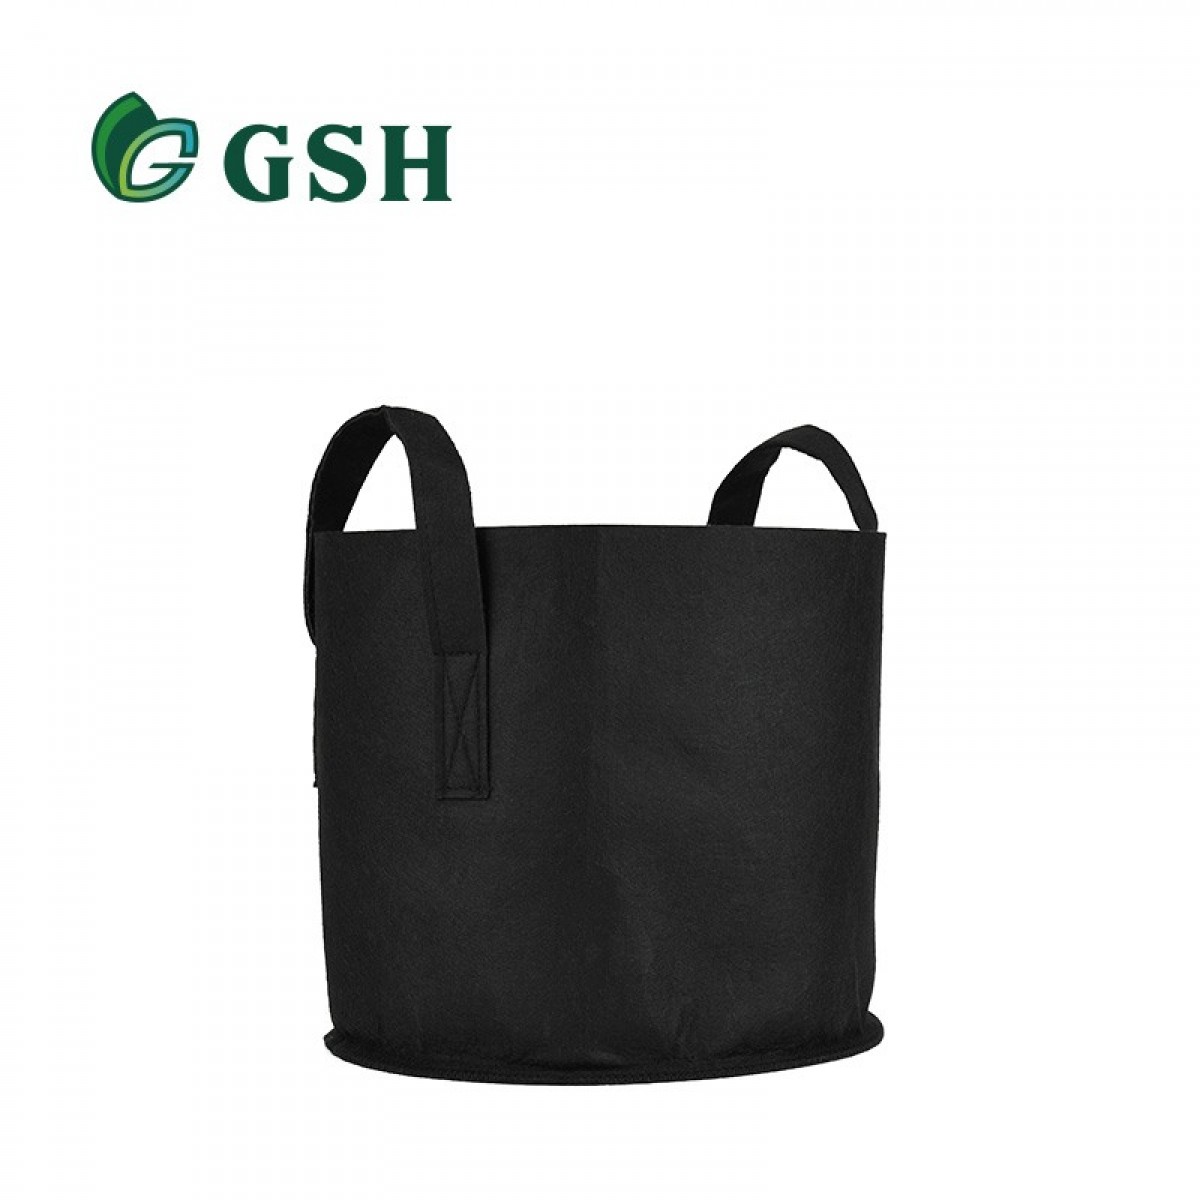 GSH Gardener's Grow Bag (5Gal)